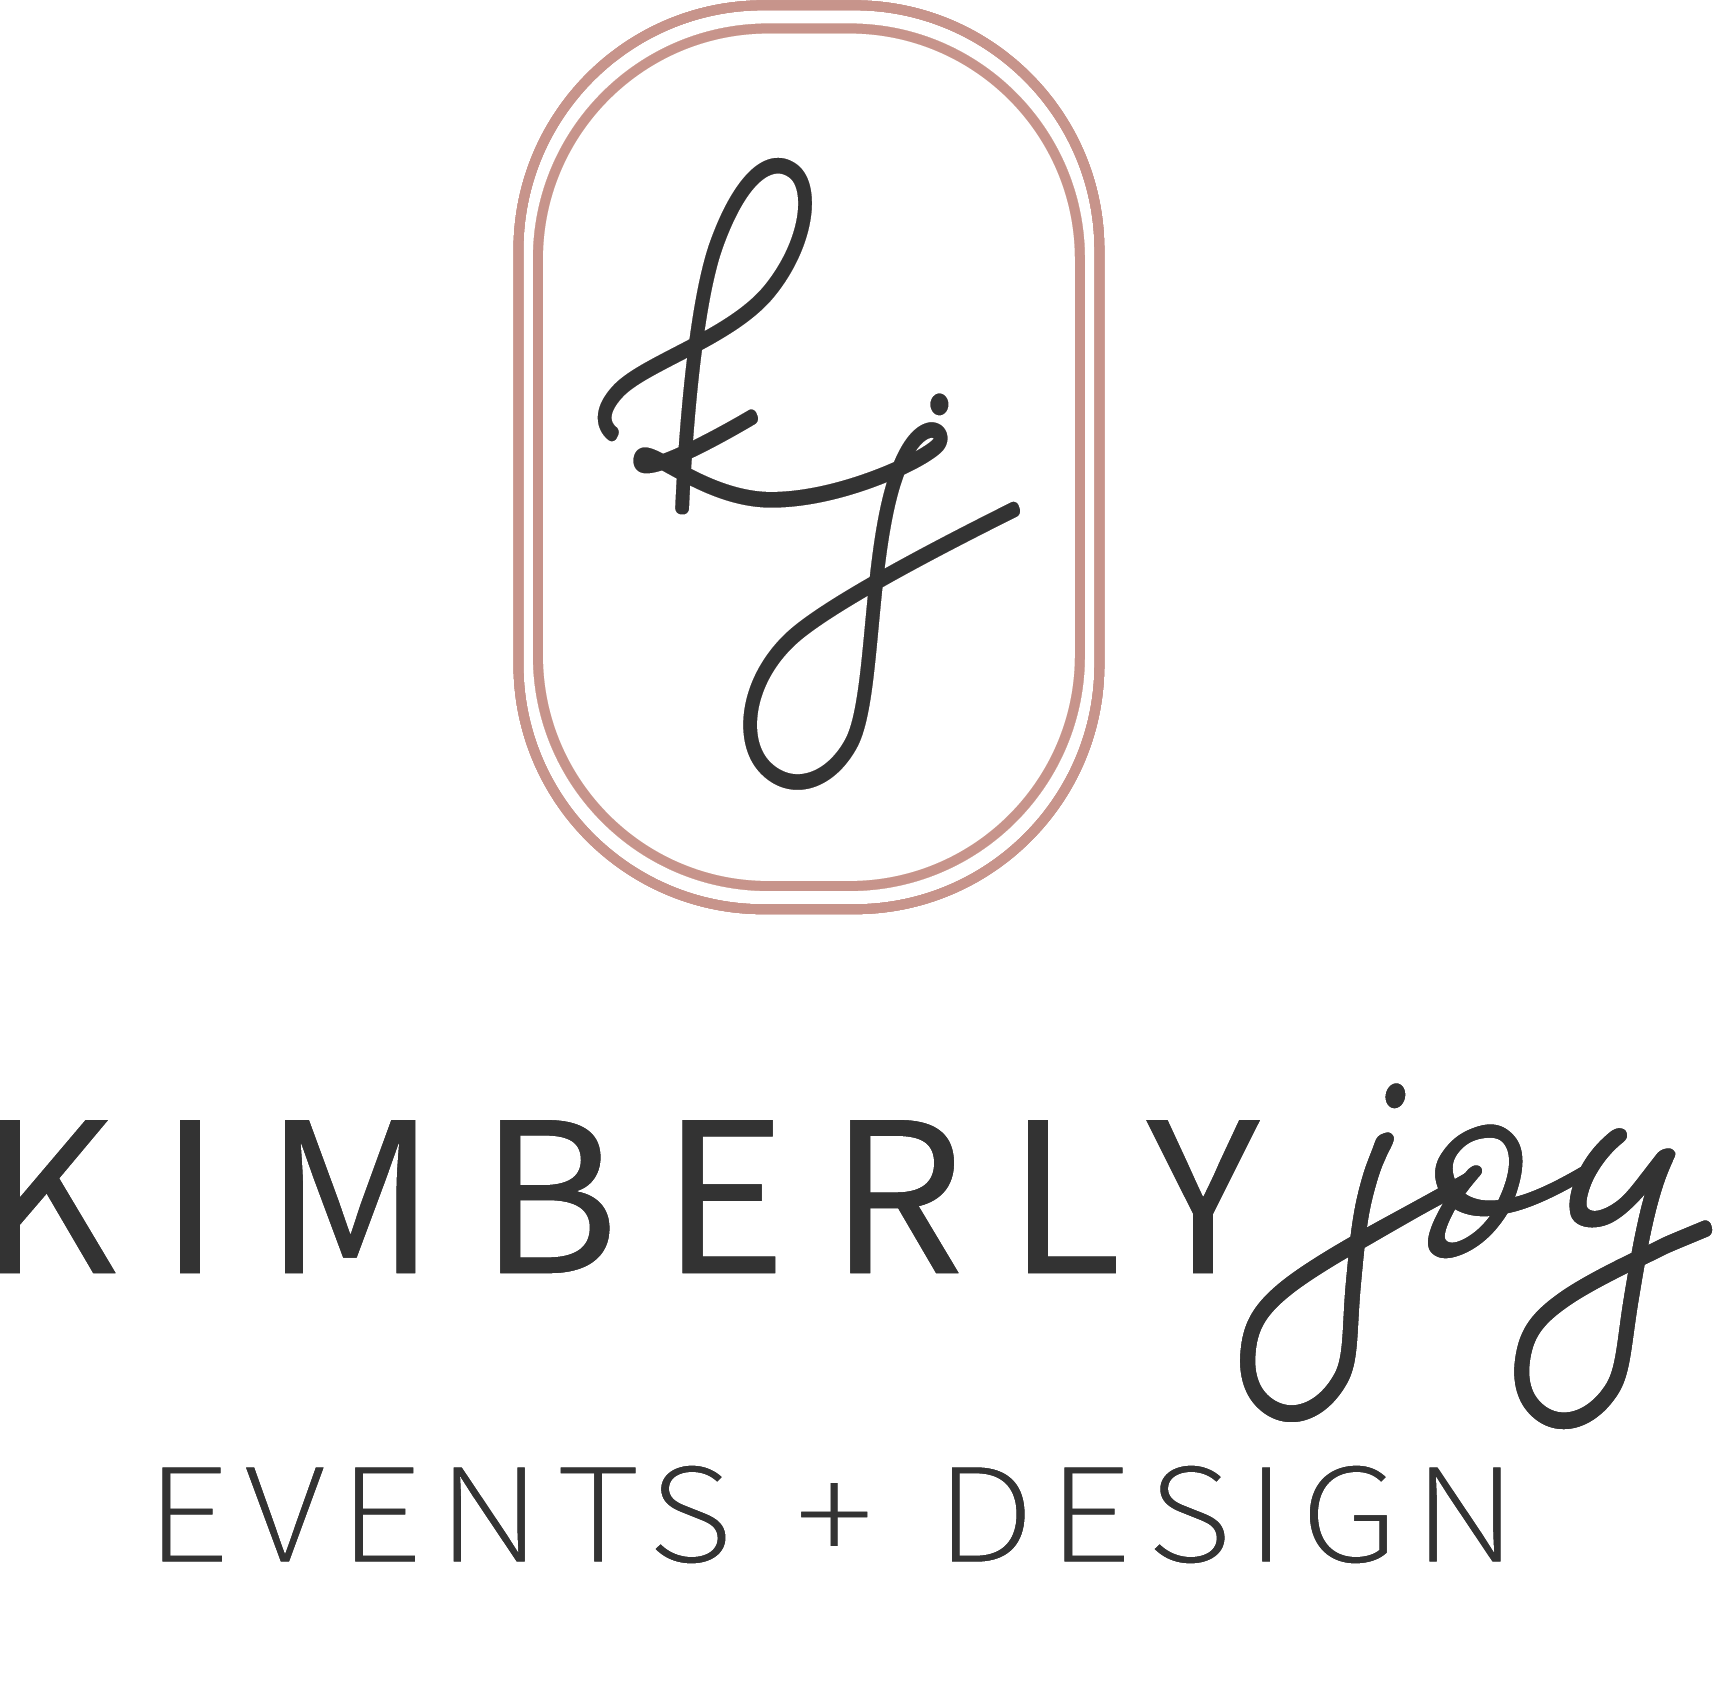 Kimberly Joy Events + Design